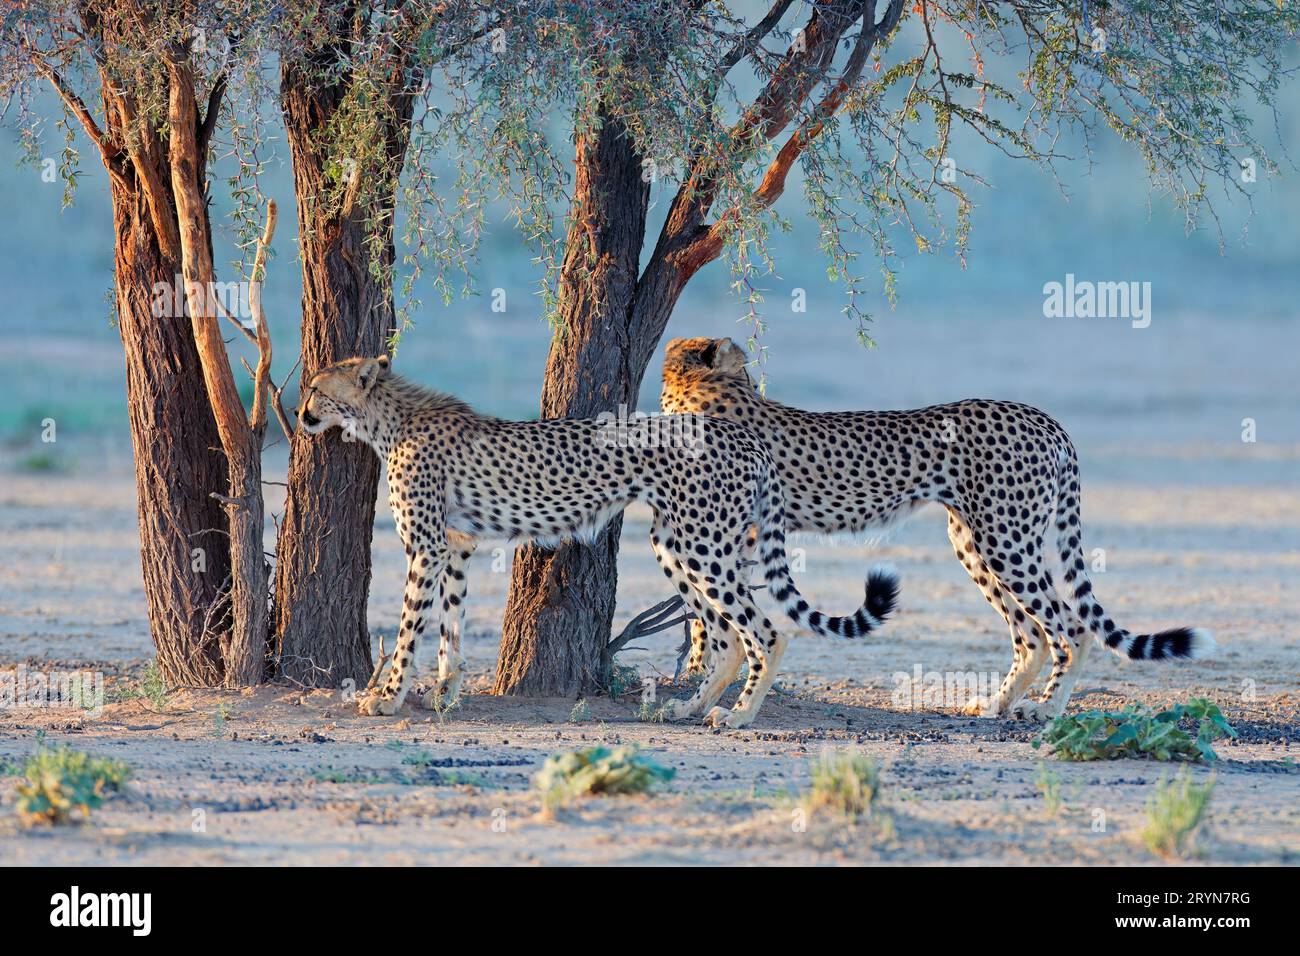 Two cheetahs (Acinonyx jubatus) in natural habitat, Kalahari desert, South Africa Stock Photo